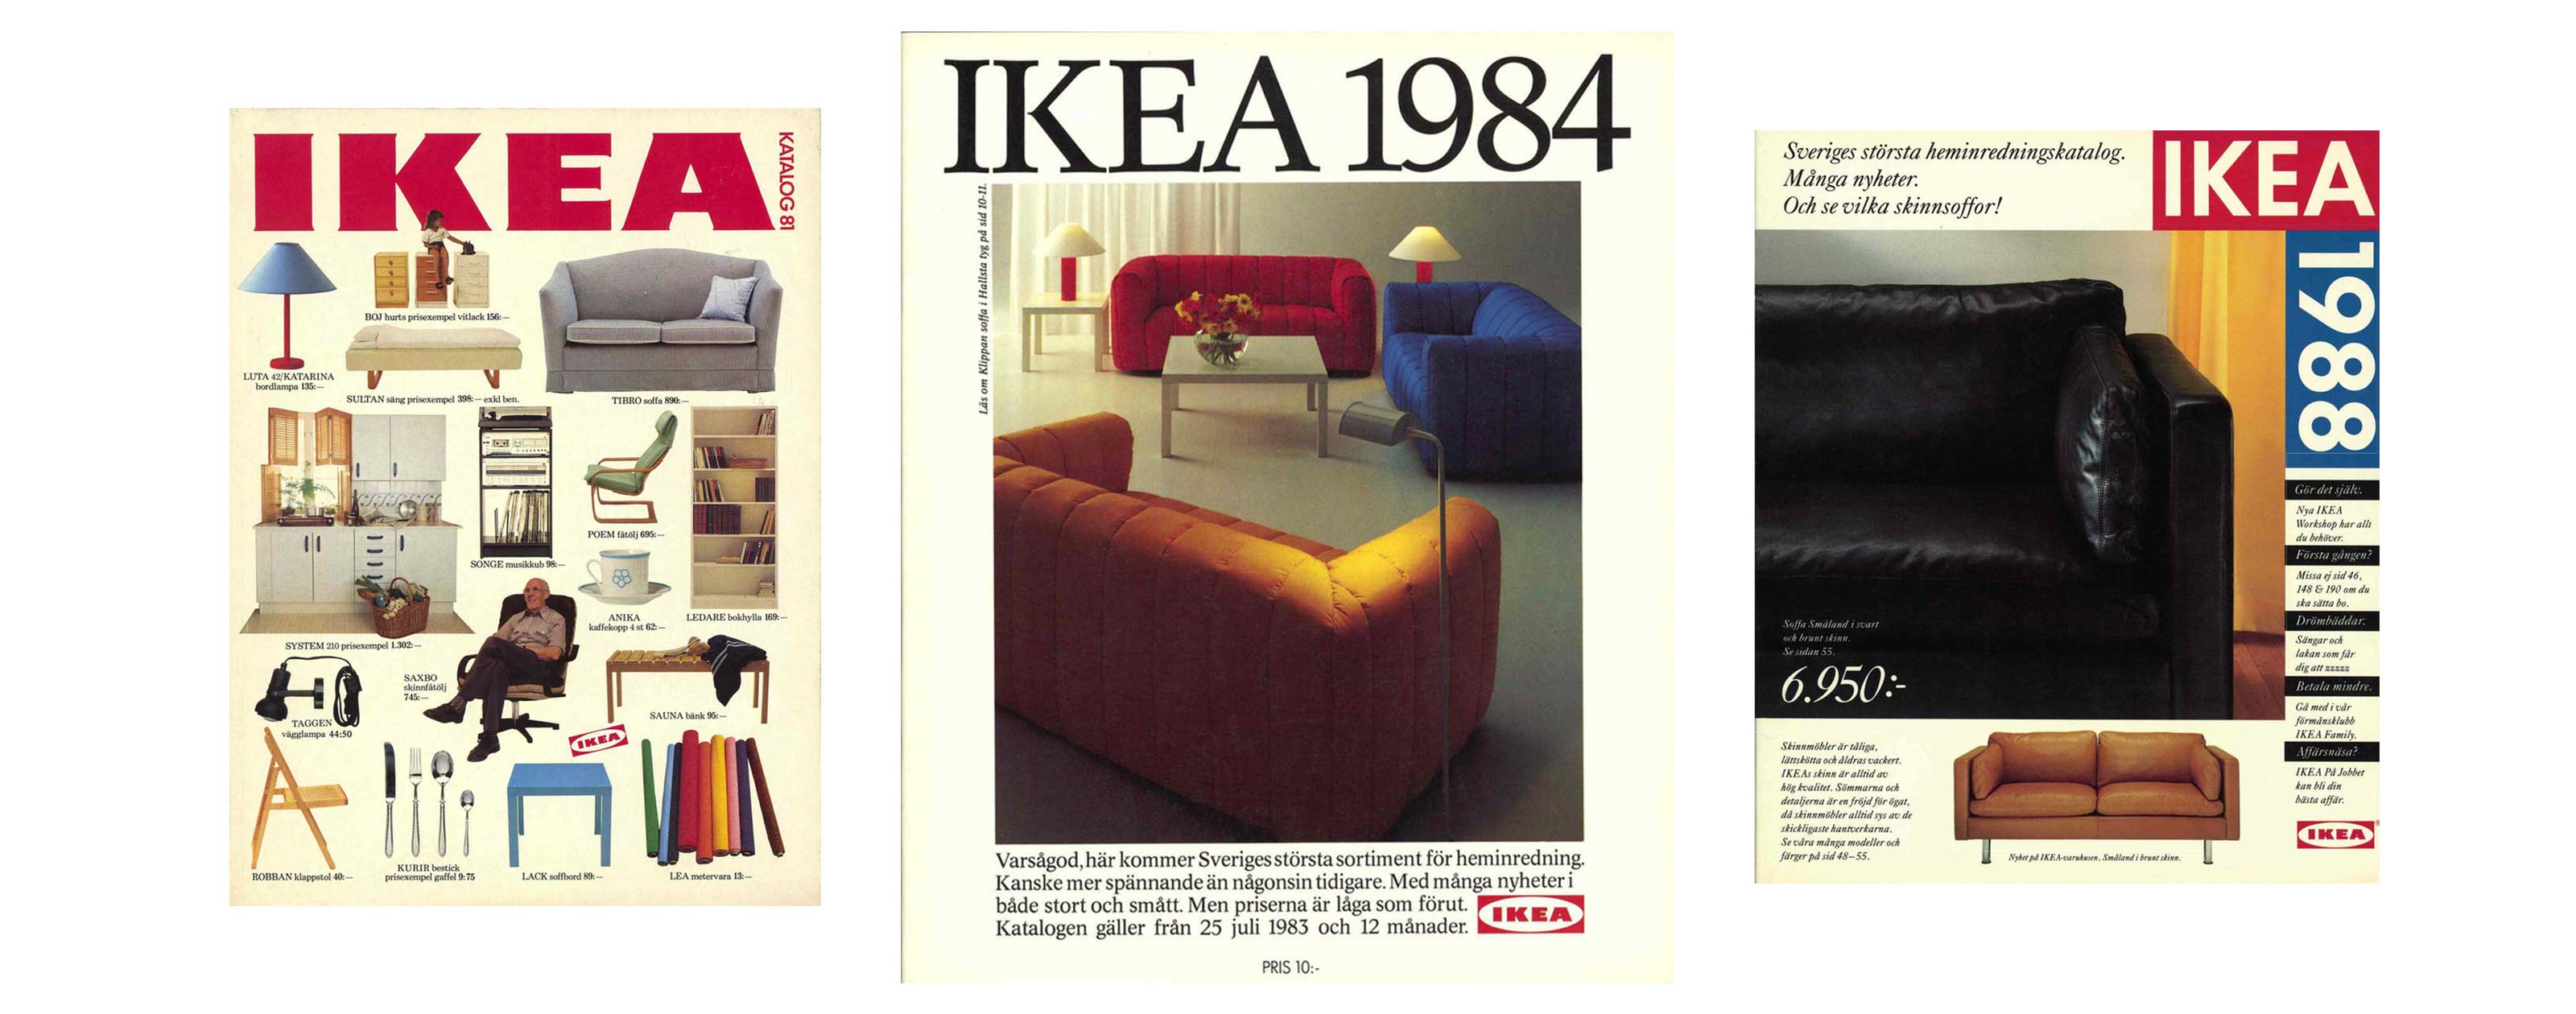 IKEA-slide 4